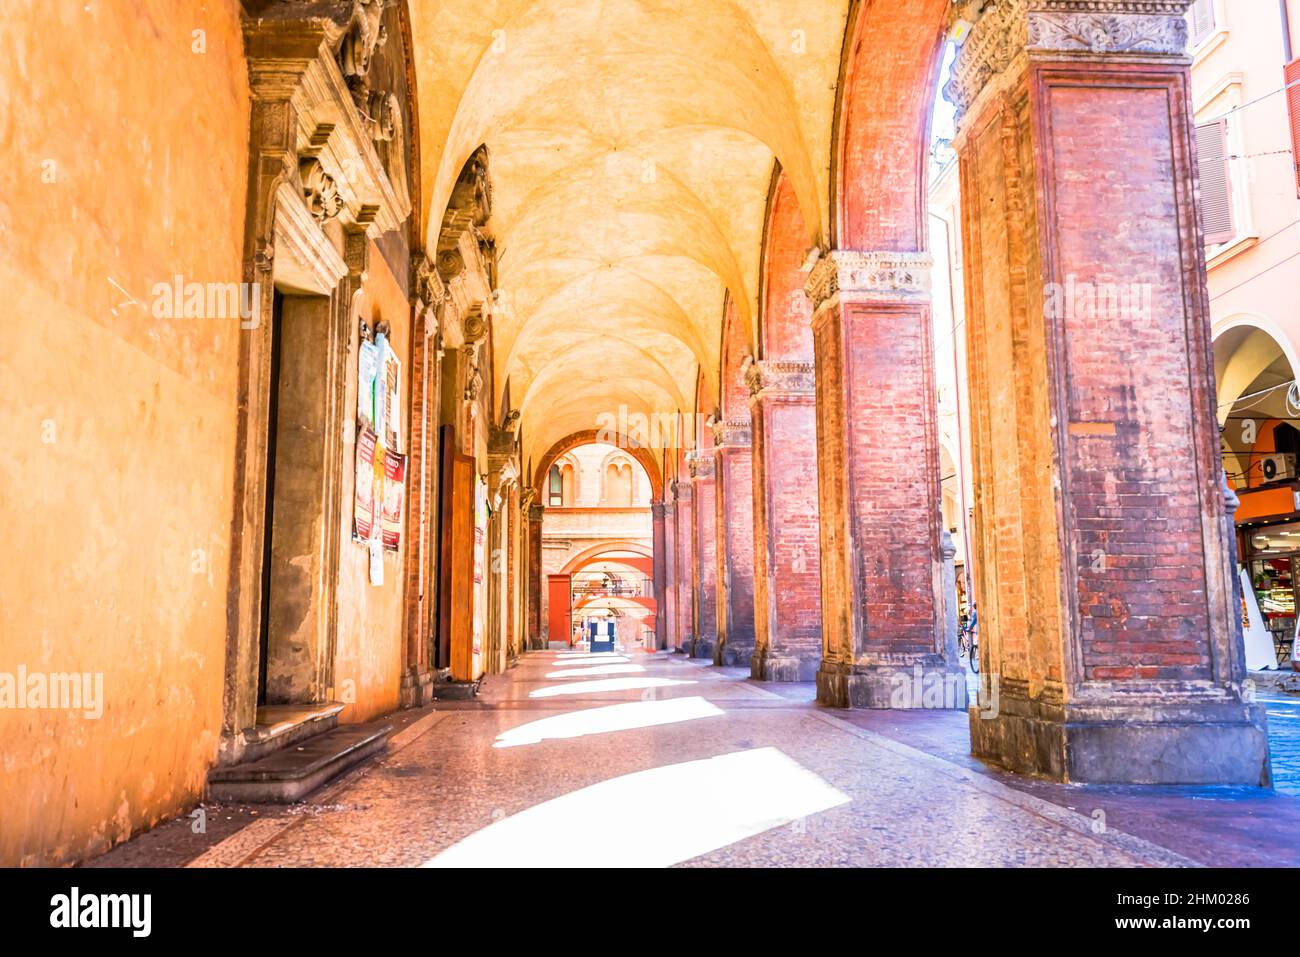 Arcade in the historical city center of Bologna, Italy Stock Photo